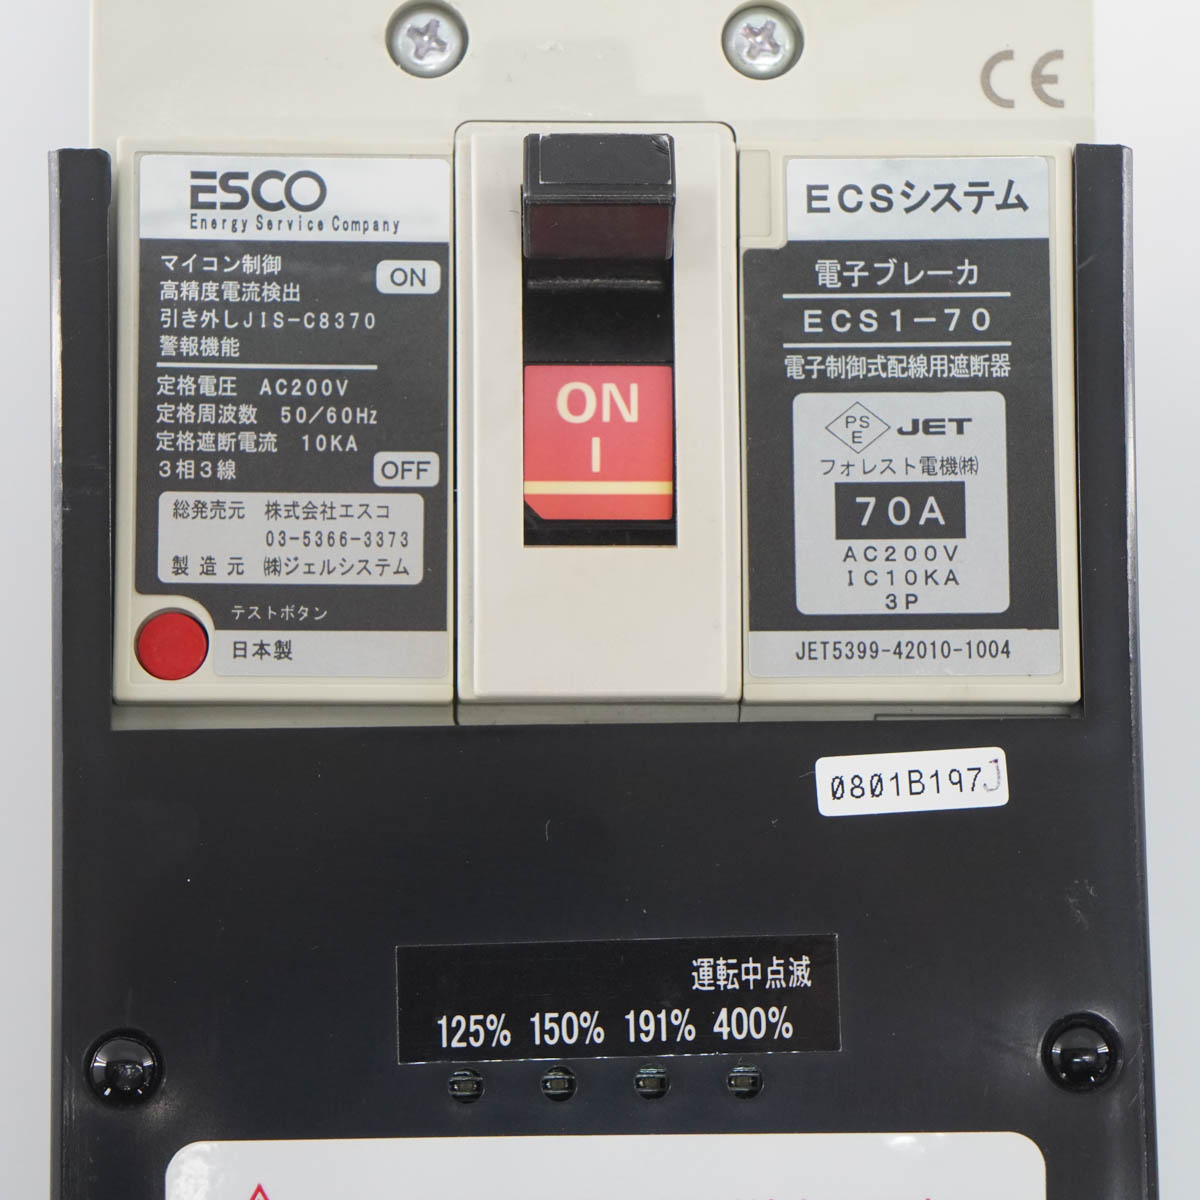 [PG]USED 8日保証 ESCO ECS1-70 電子ブレーカー 70A AC200V 1C10KA 3P 50/60Hz 10KA 3相